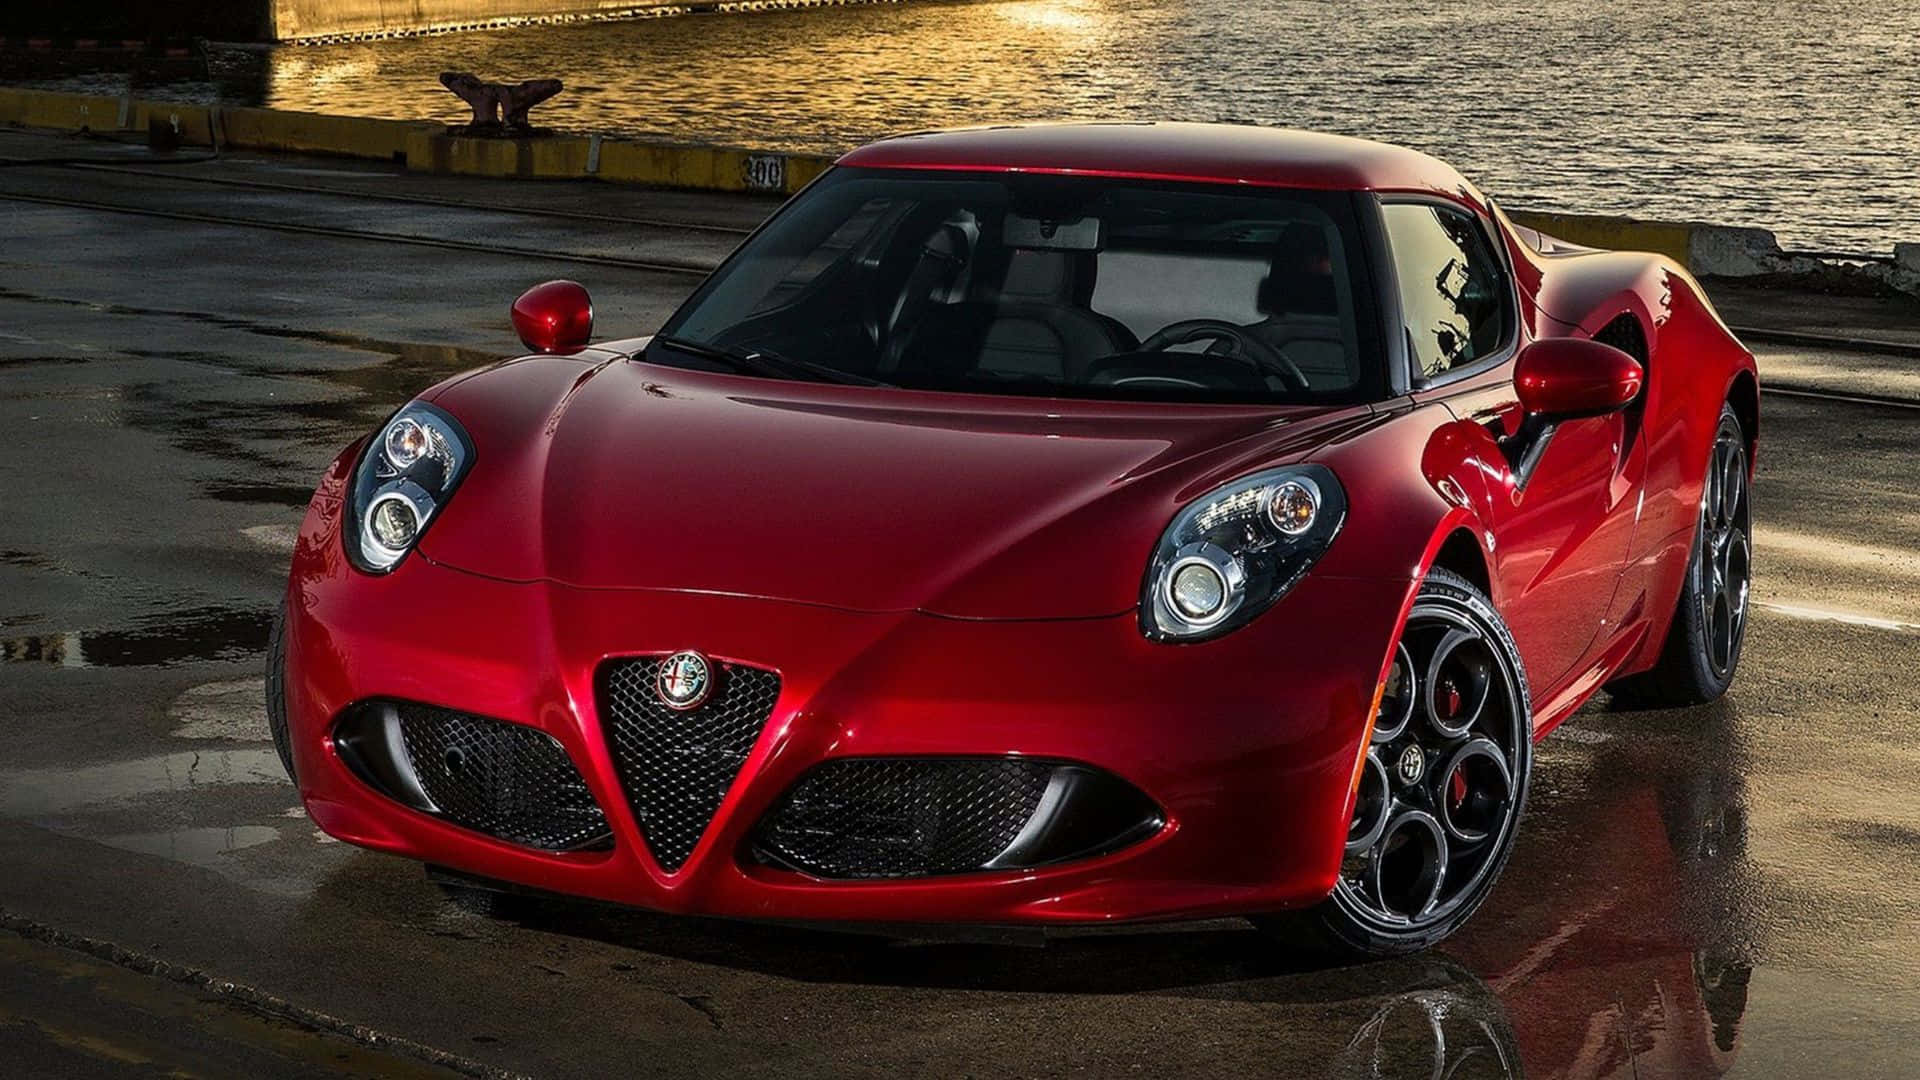 Sleek Alfa Romeo 4C sports car in motion Wallpaper